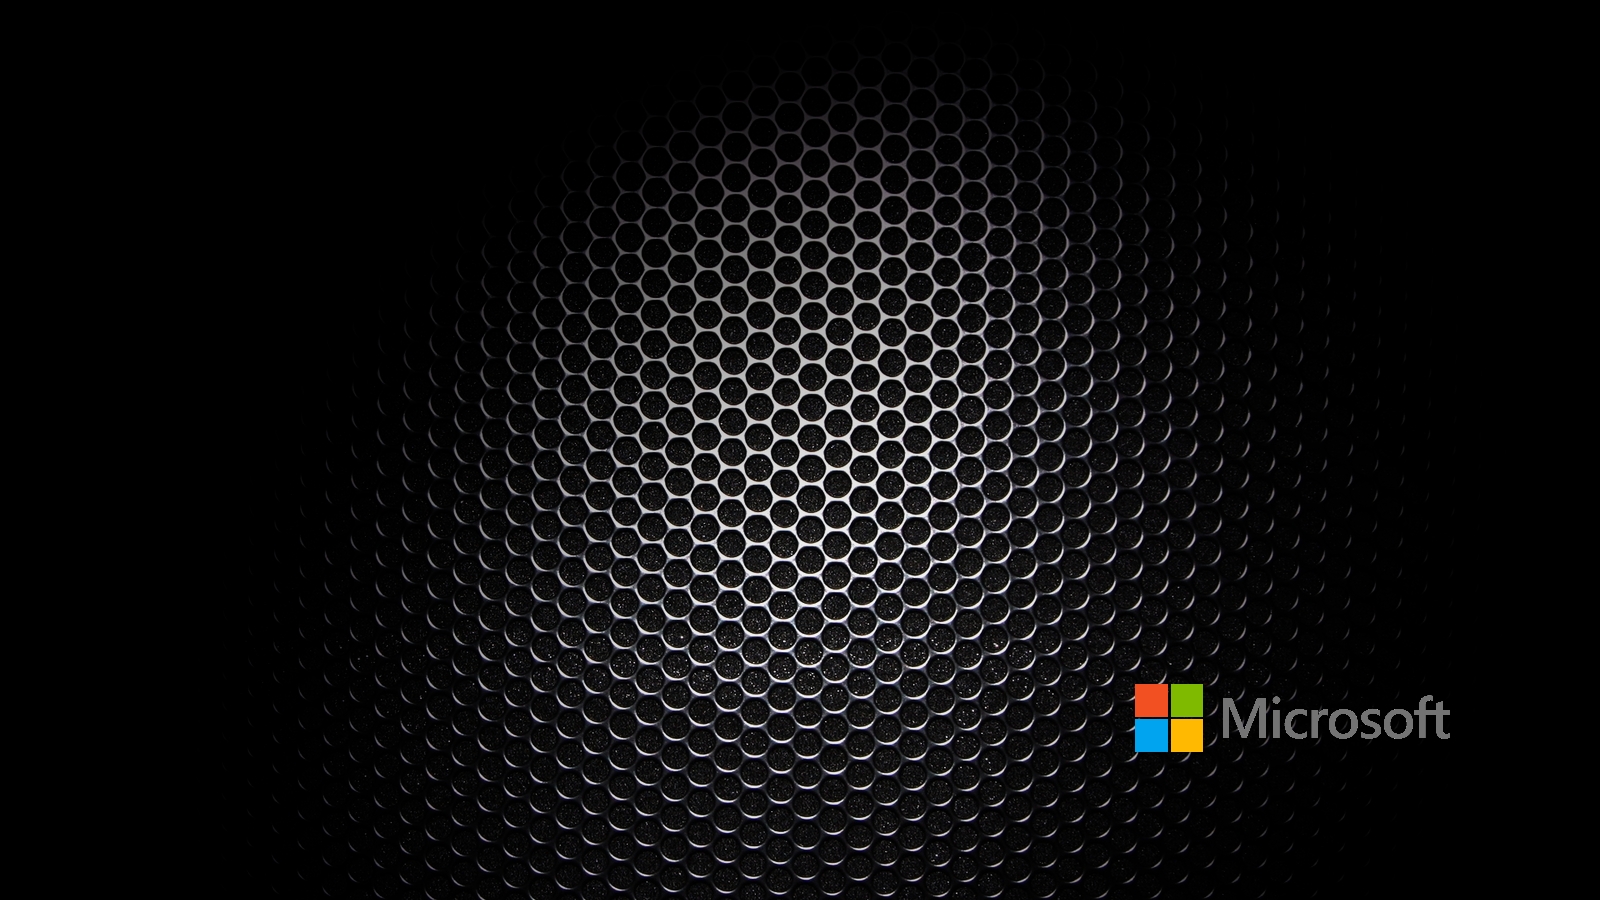 Microsoft Wallpaper   wwwhigh definition wallpapersinfo